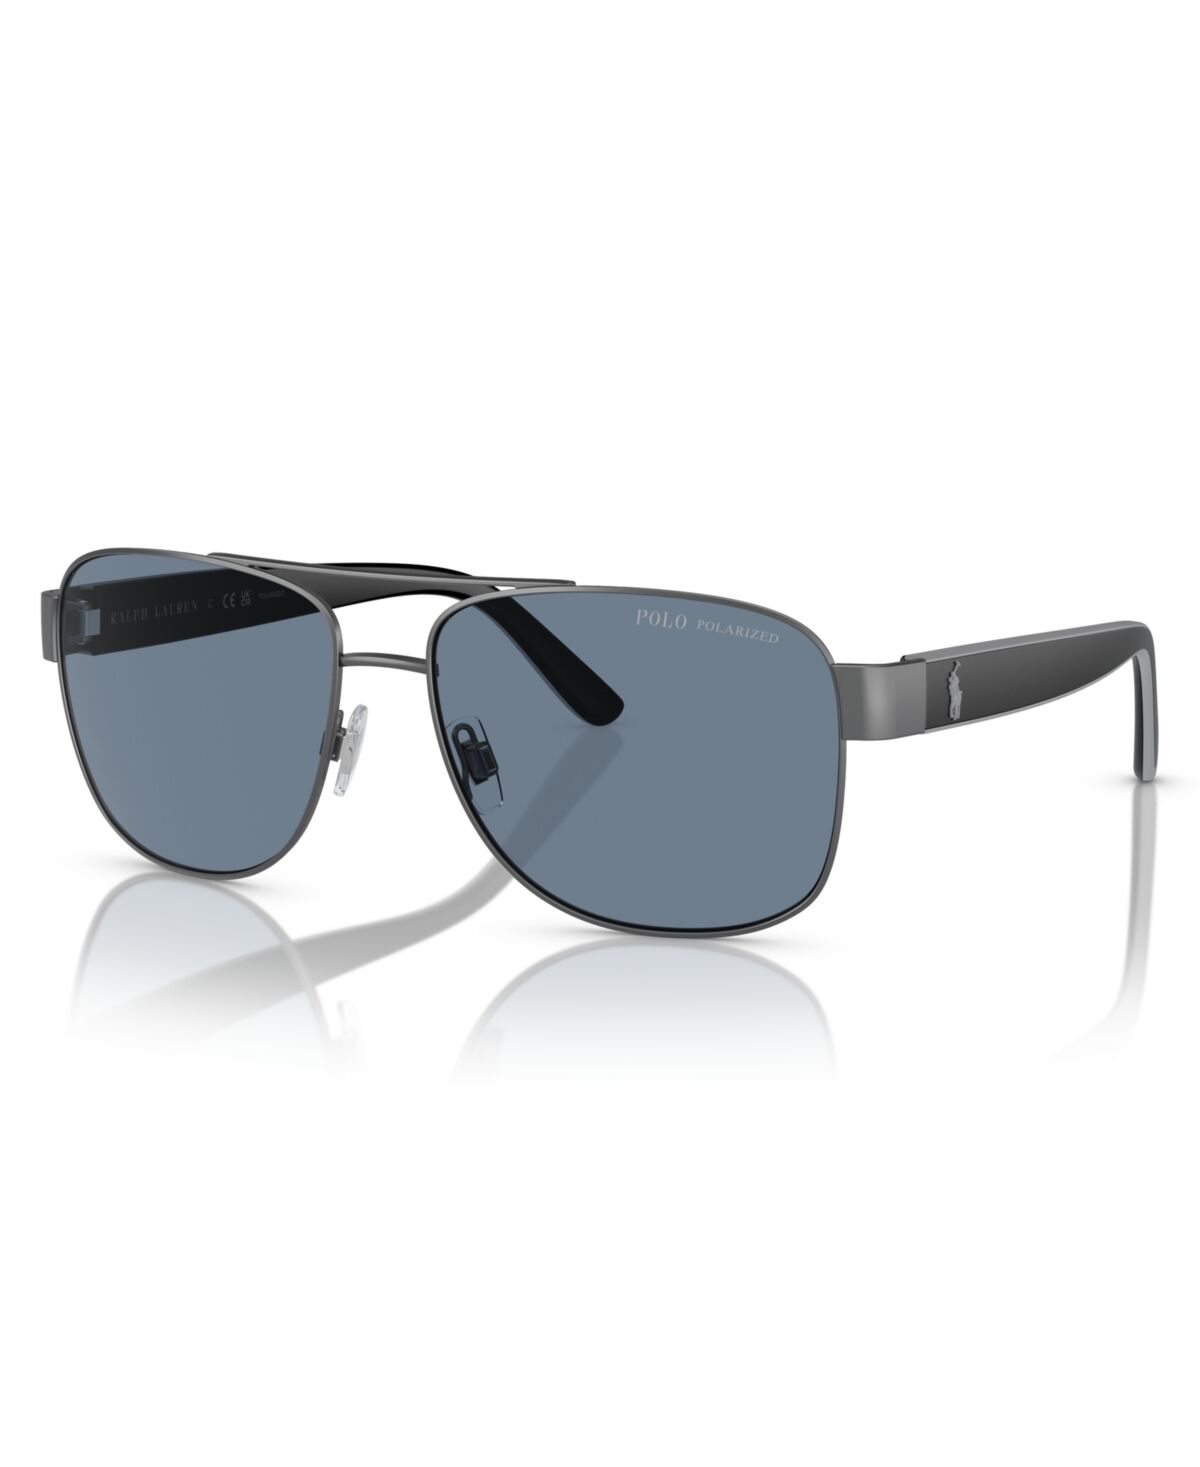 Ralph Lauren Polo Ralph Lauren Men's Polarized Sunglasses, PH3122 - Matte Dark Gunmetal